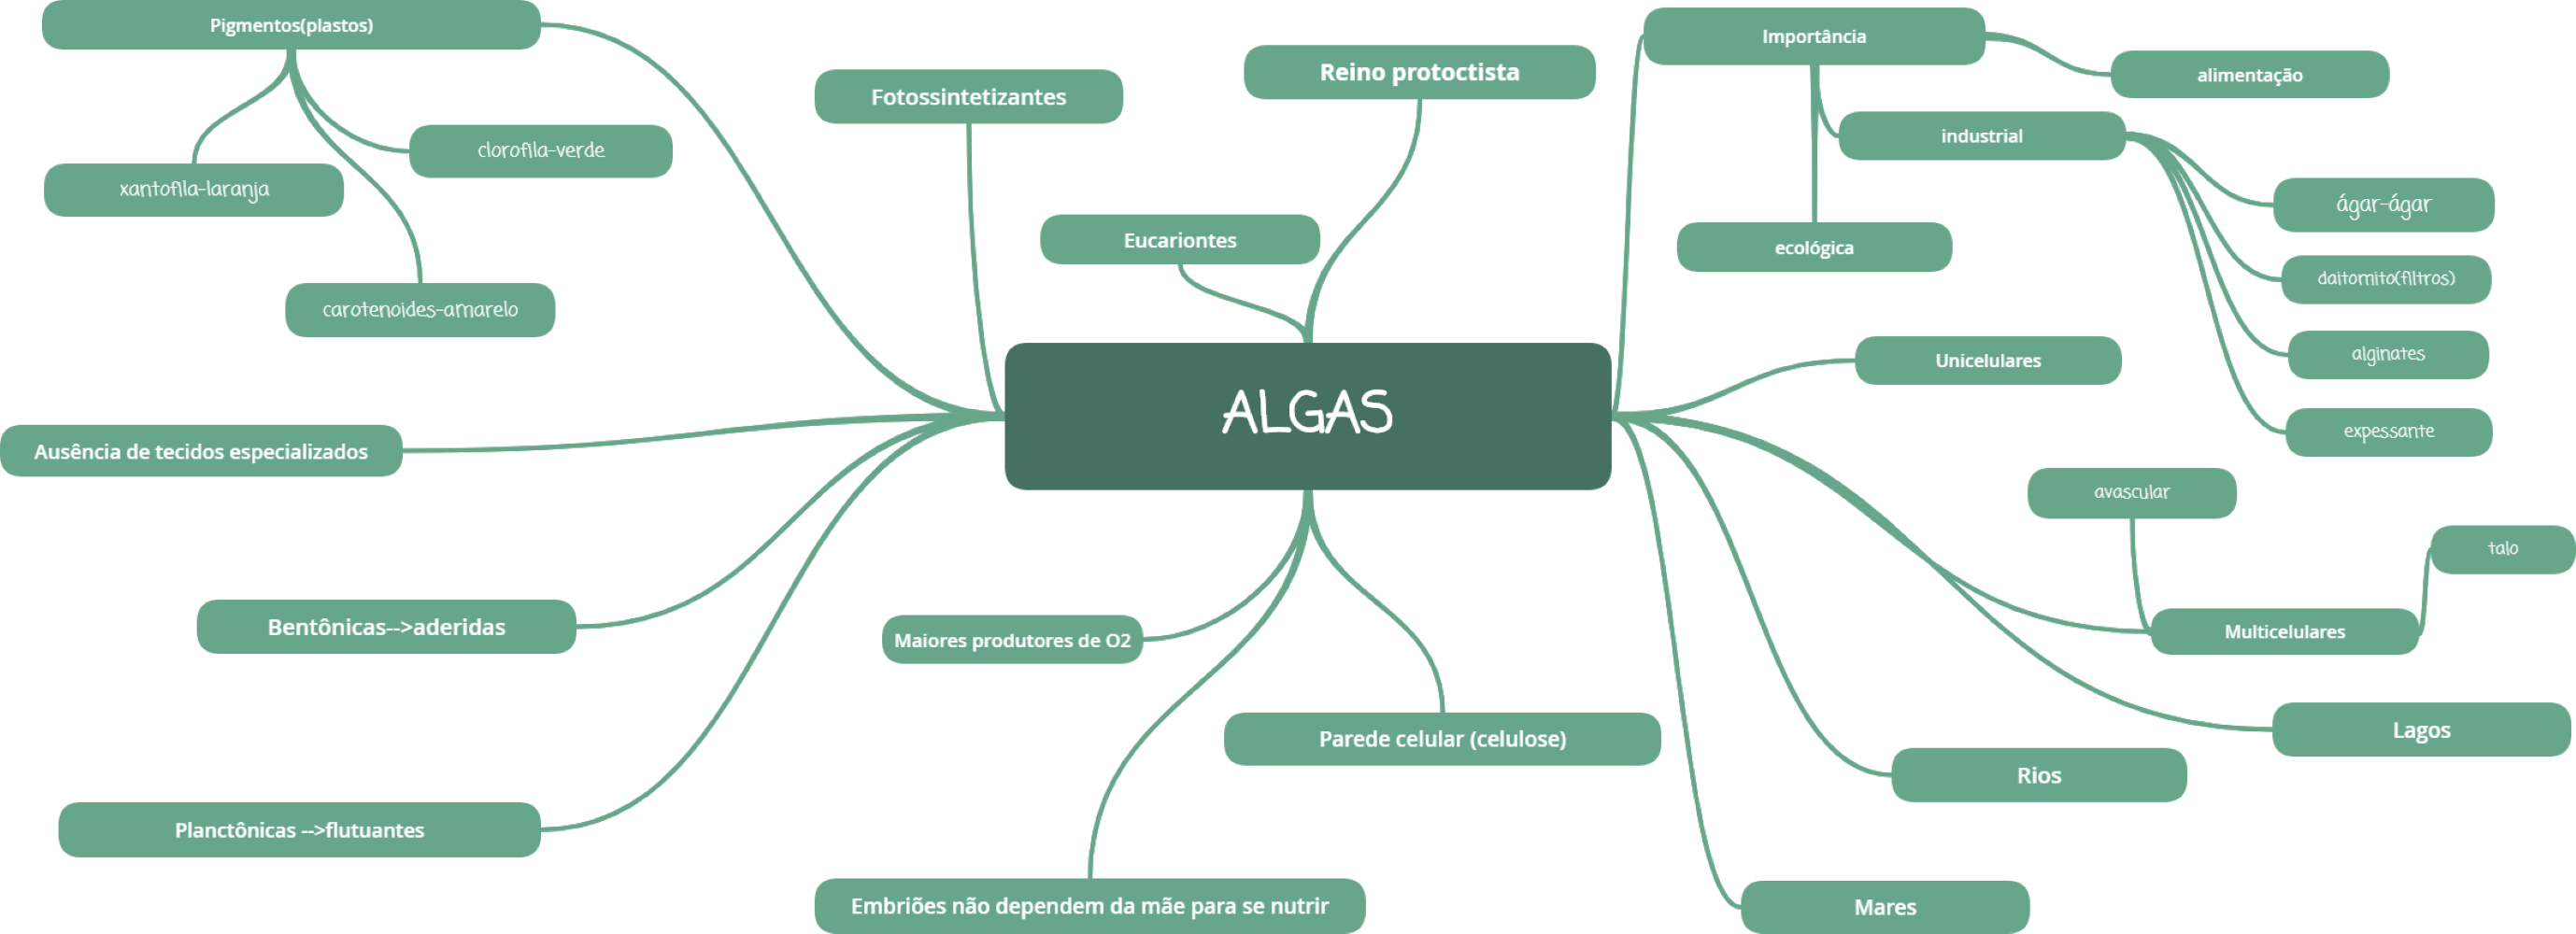 Mapa Mental sobre Algas - Biologia